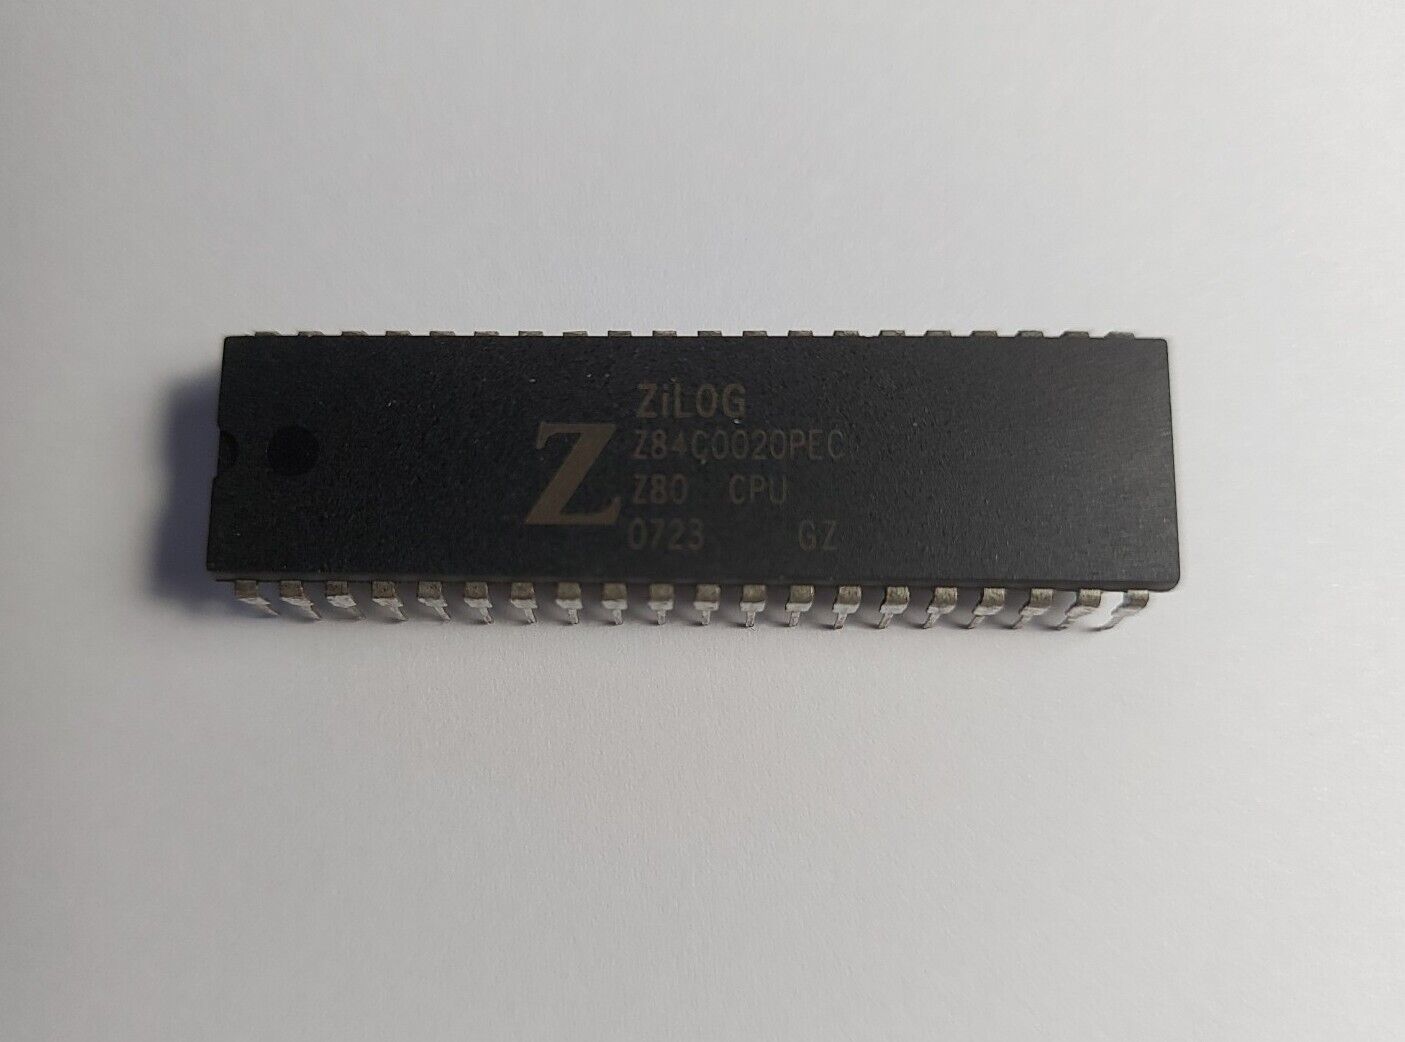 5pcs Remarked ZILOG Z84C0020PEC Z80 CPU DIP-40  - Tested to boot CP/M @ 2MHz Zilog Z84C0020PEC